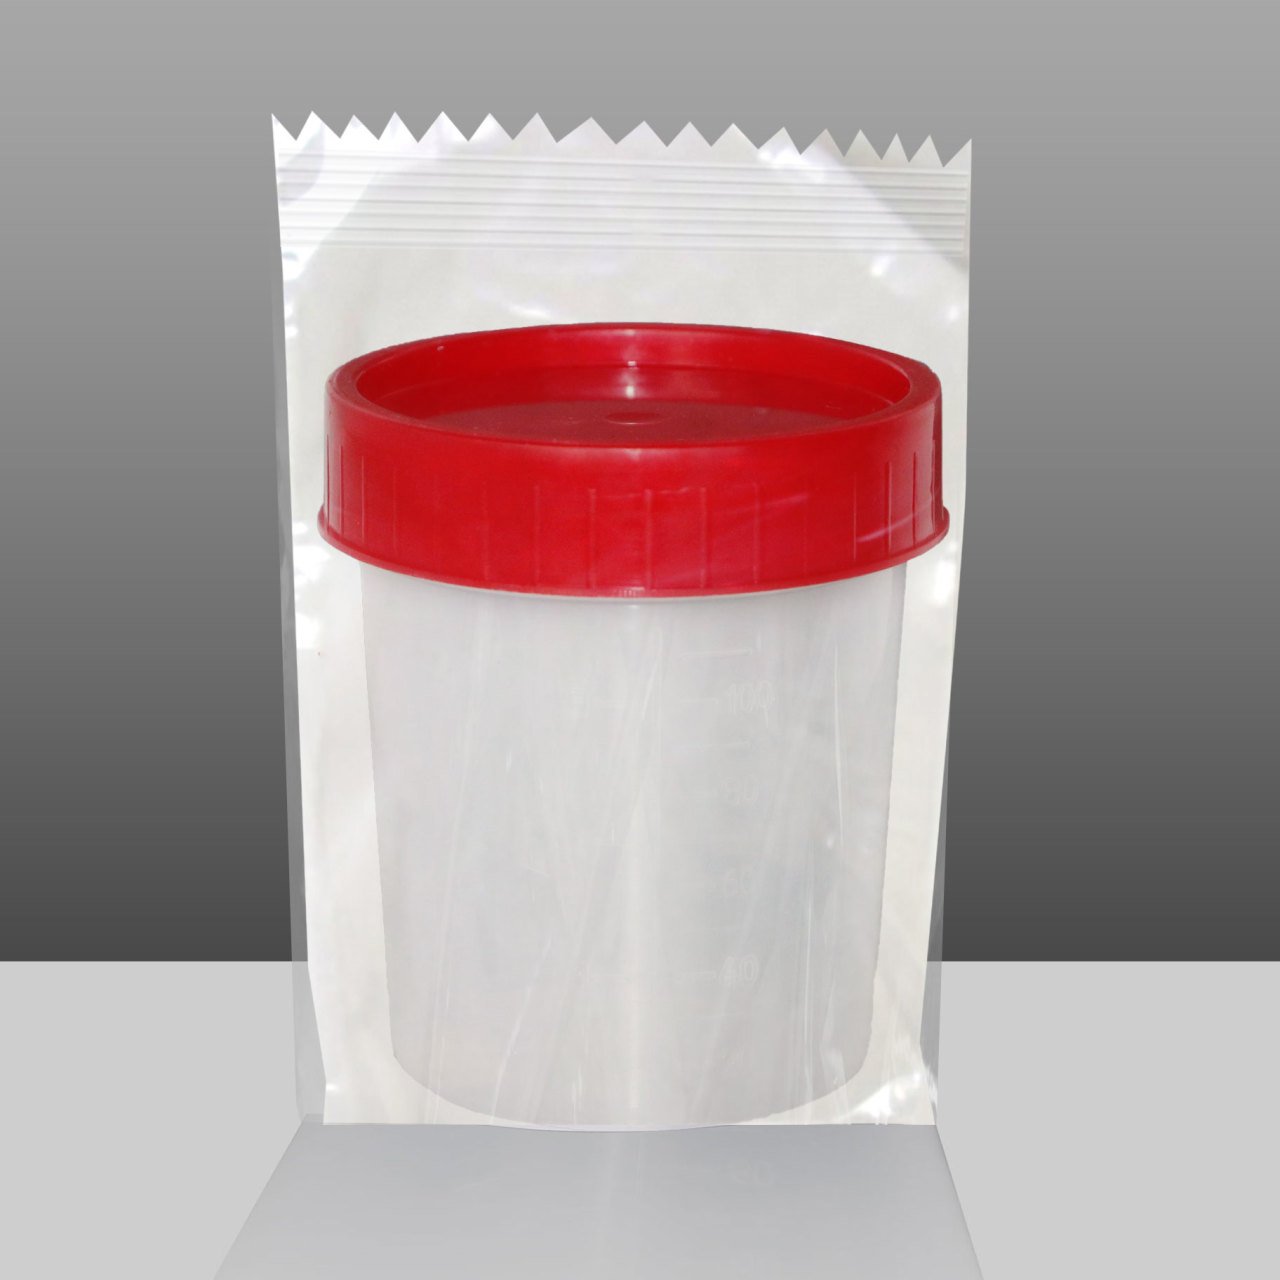 İdrar Toplama Bardağı 100 ml (Steril / Tekli Poşetli) / Urine Collection Container (Sterile / Packed)